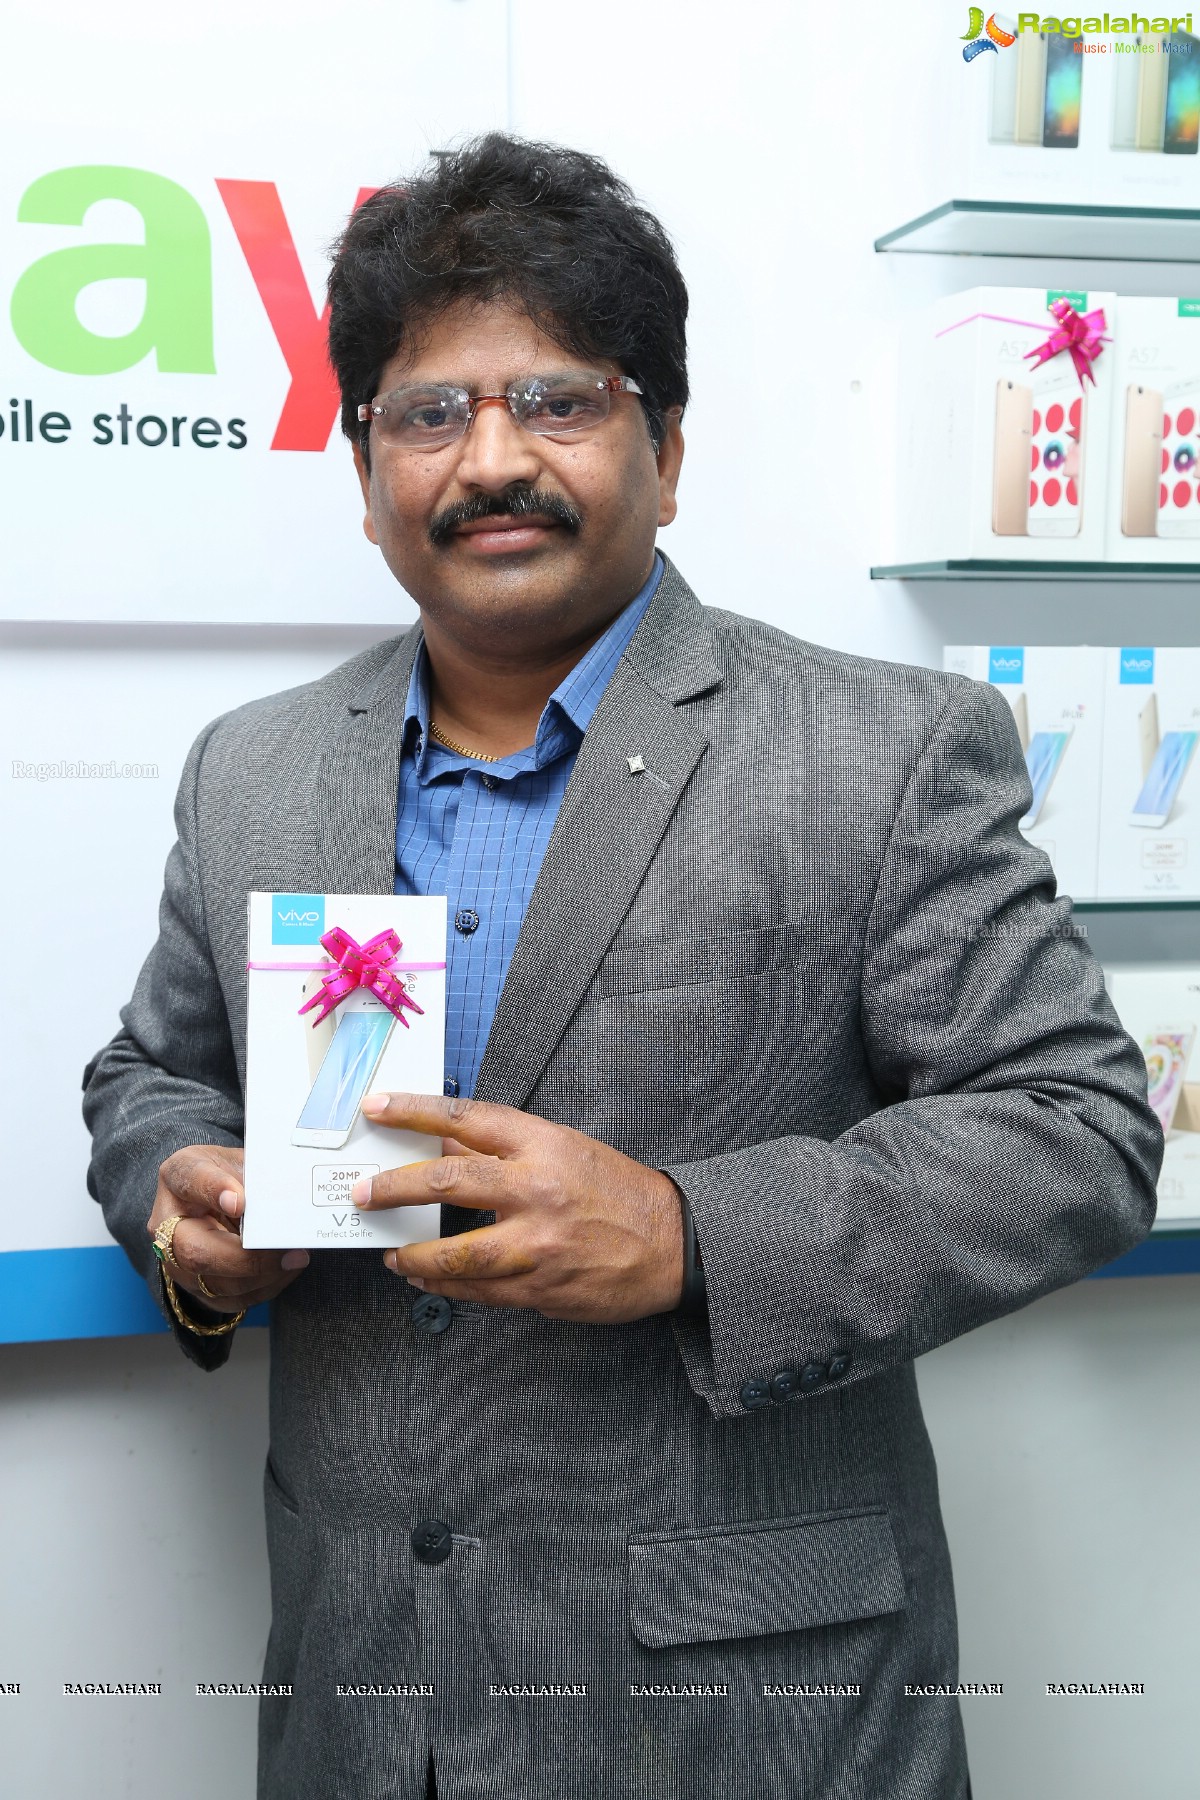 Cellbay - Multi Brand Mobile Store Launch by Yamini Bhaskar at Jagathgiri Gutta, Hyderabad